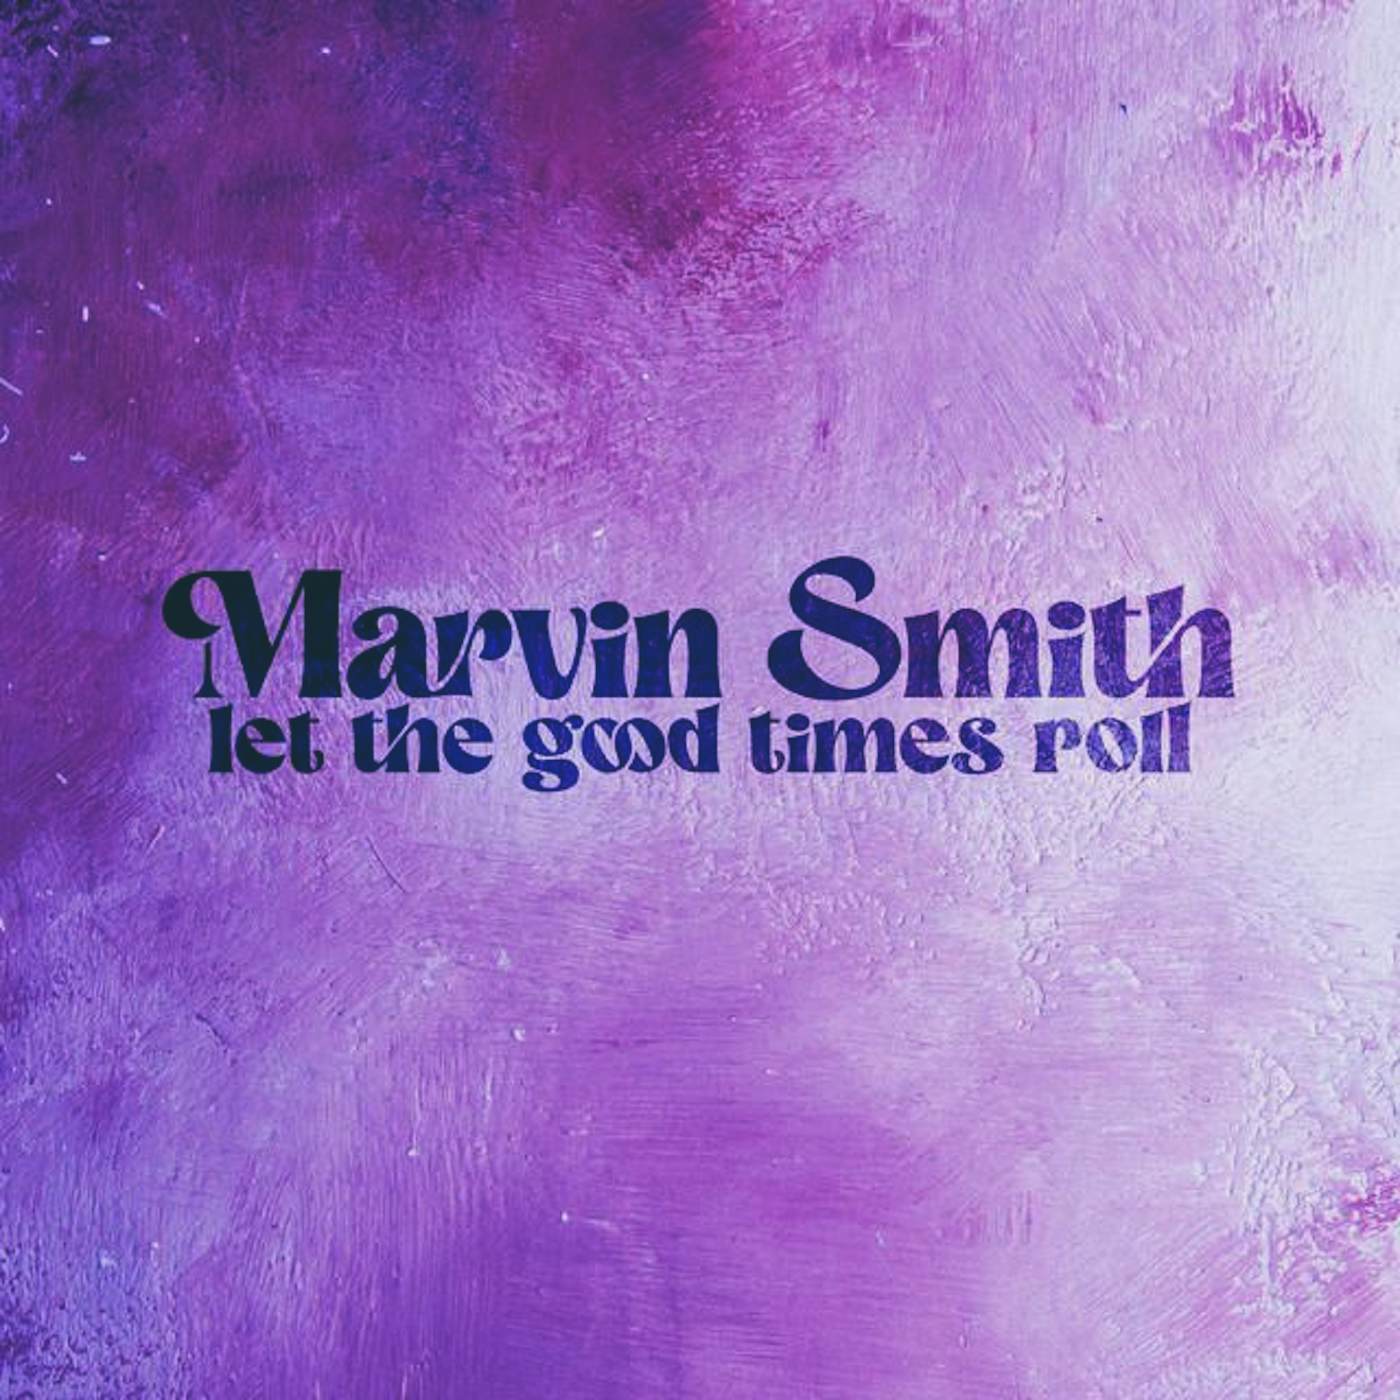 Marvin Smith